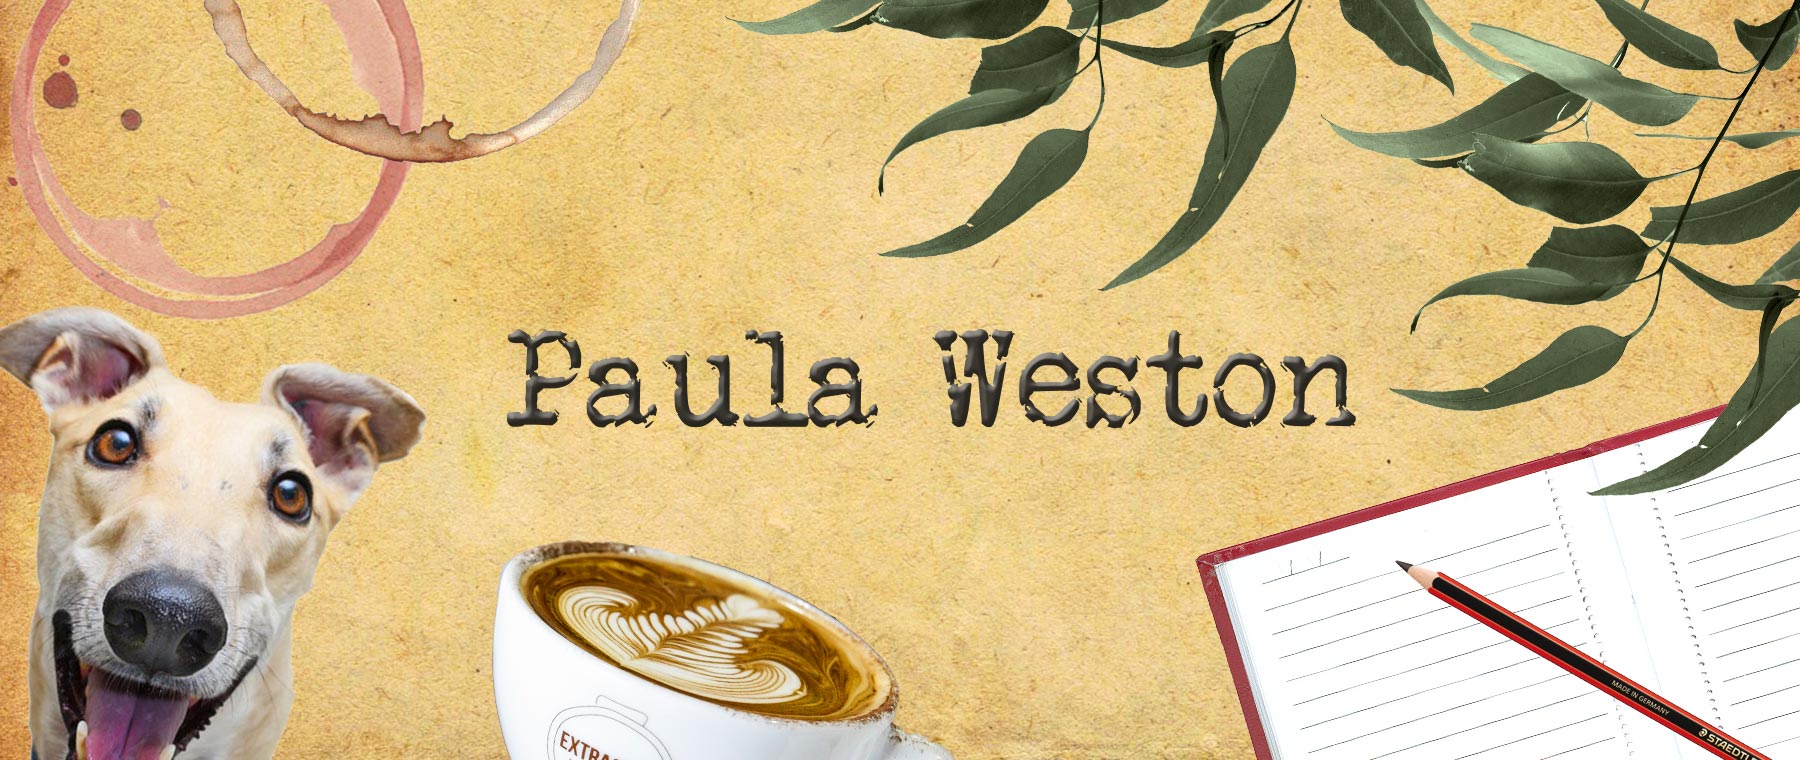 Paula Weston